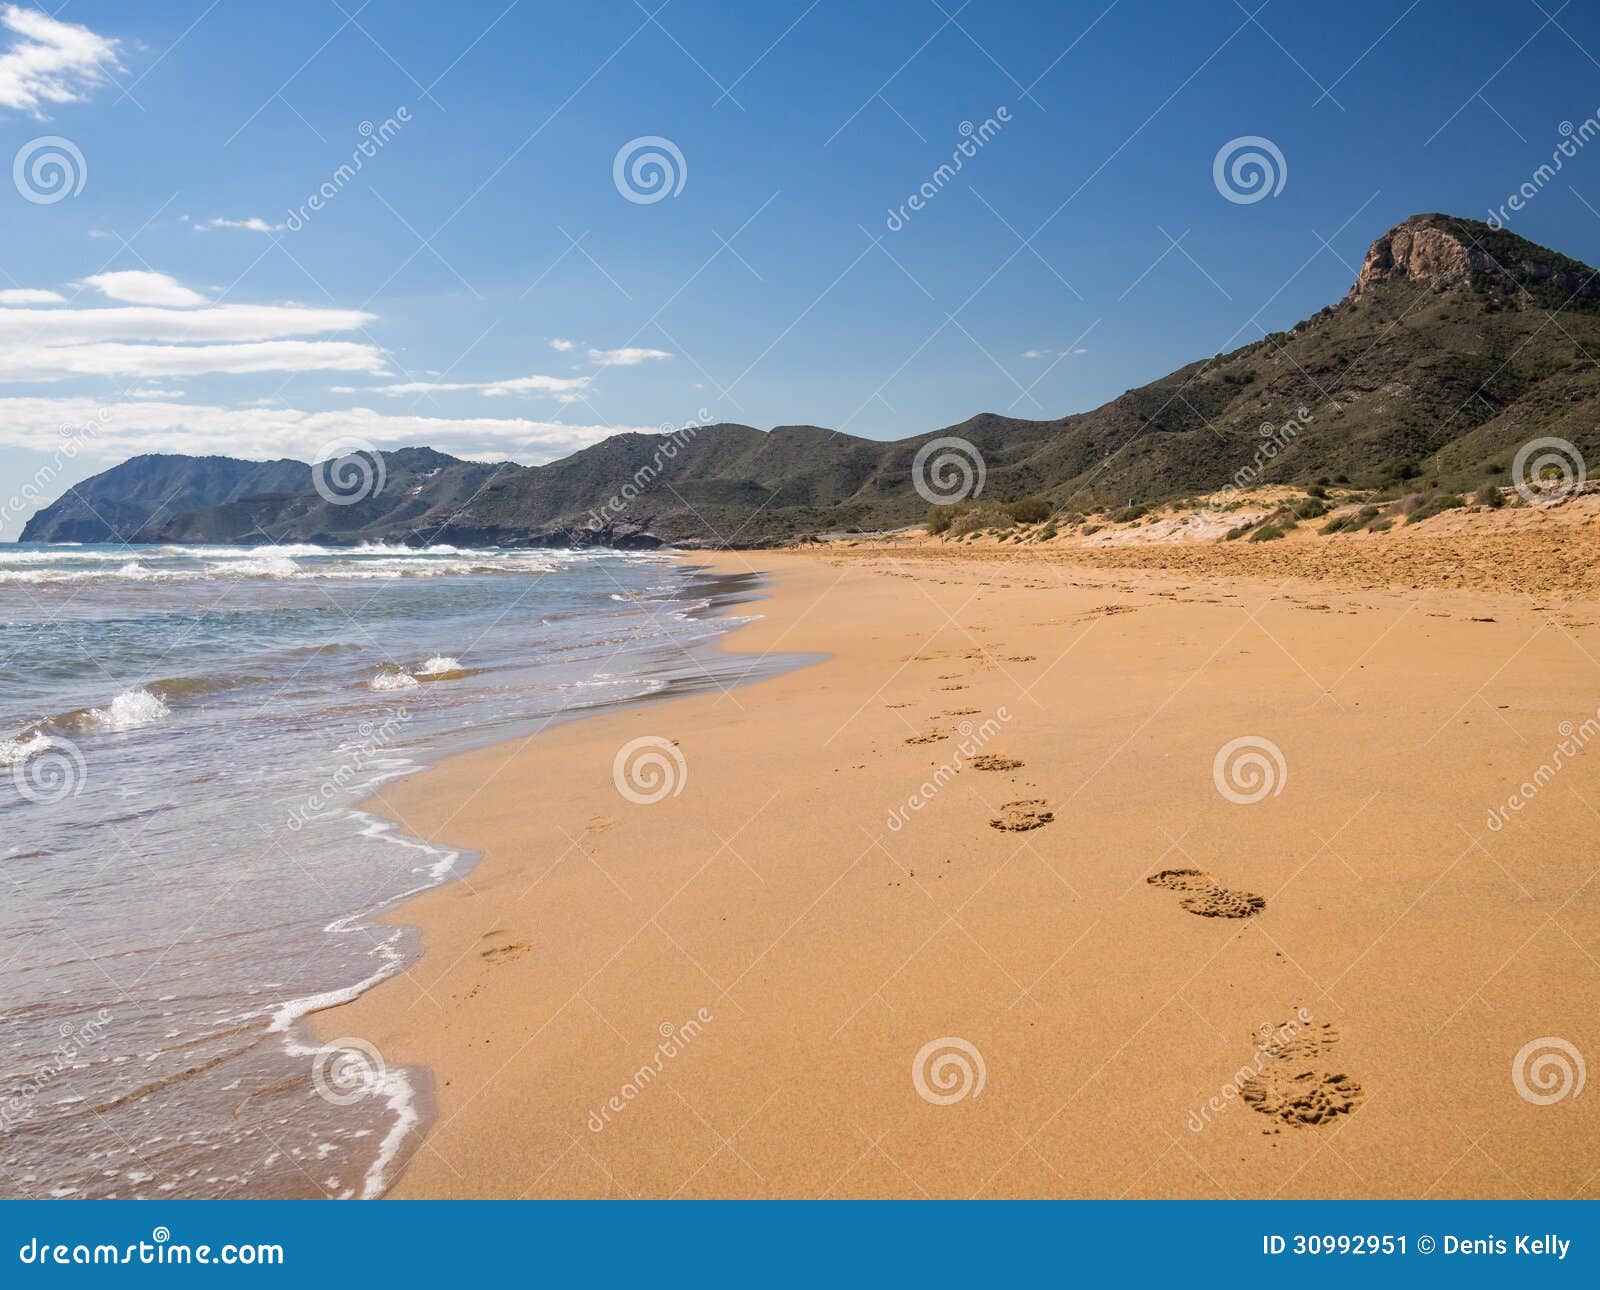 Deserted Beach, Costa Calida, Spain Stock Image - Image of costa, clean:  30992951